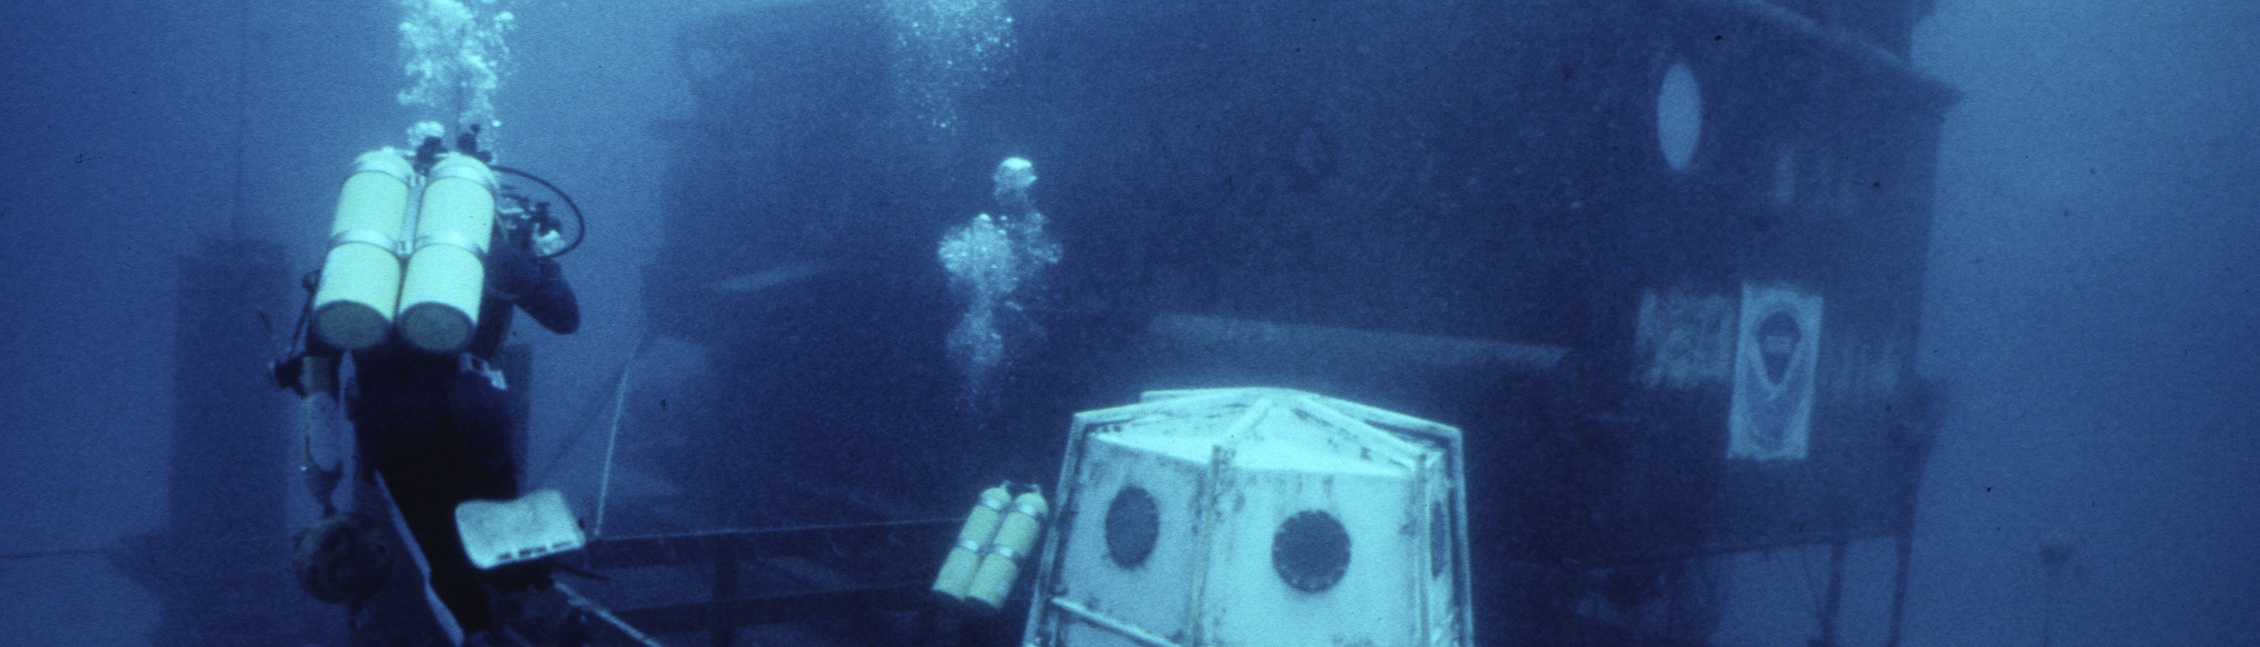 Binder 7: Hydrolab and St. Croix, 1978-1981